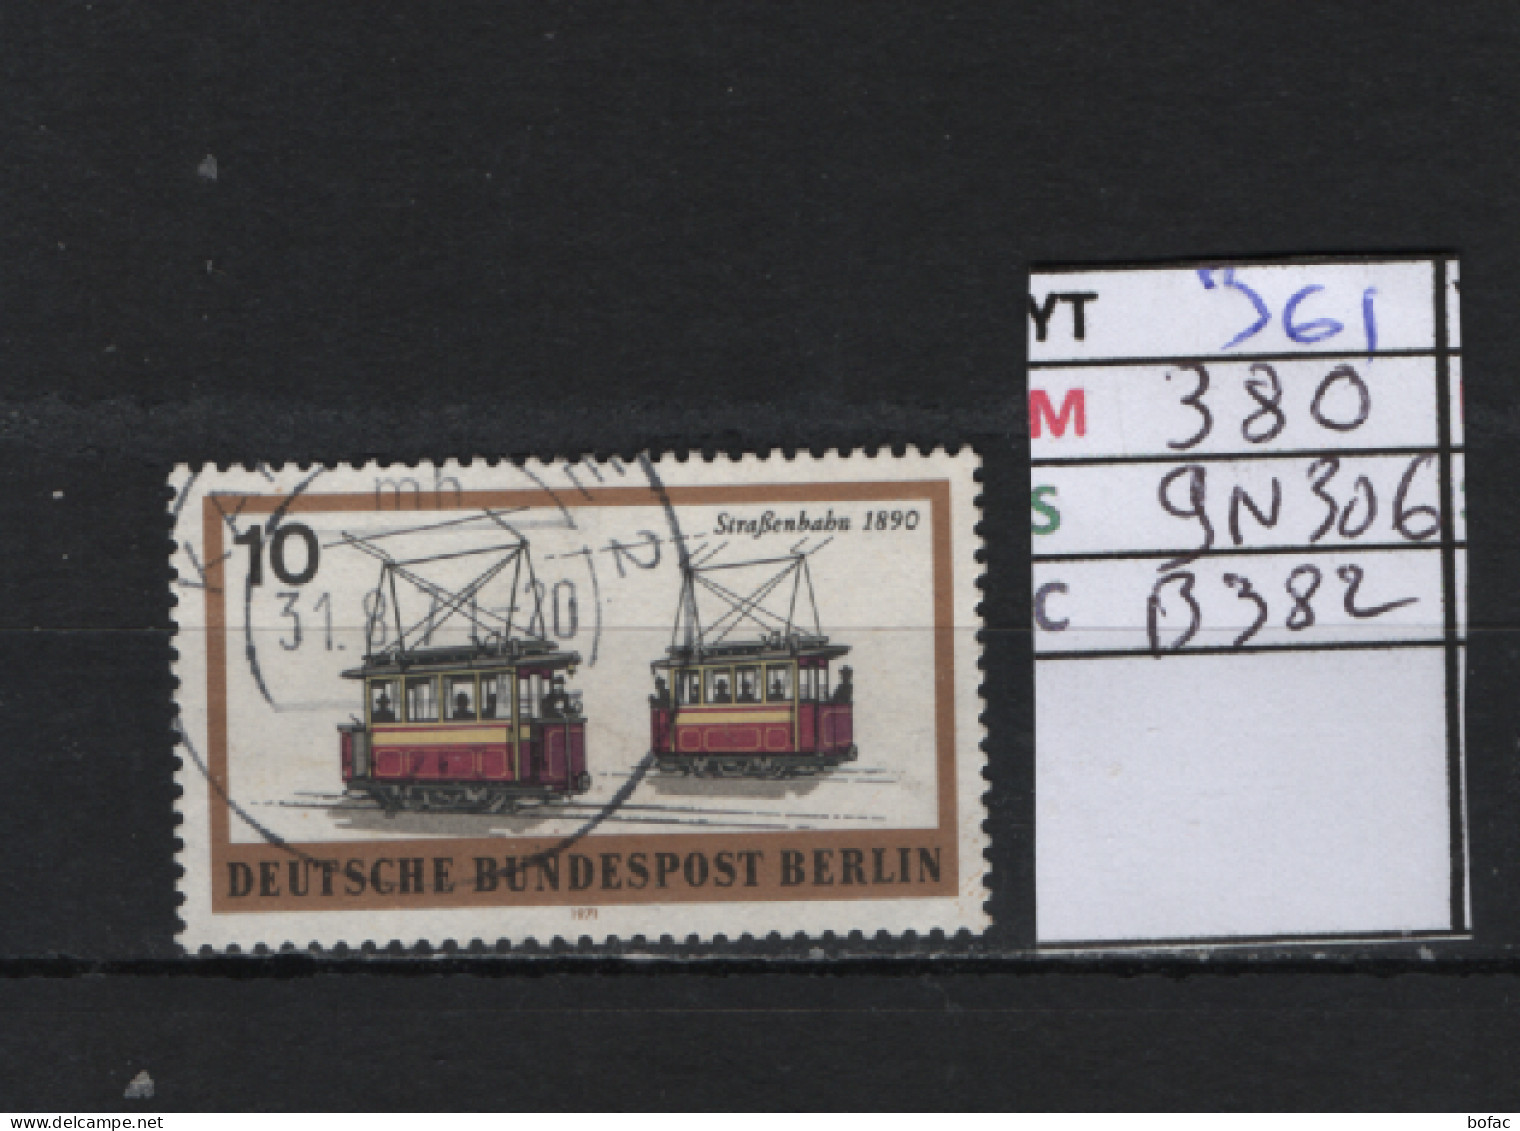 P. FIXE Obl 361 YT 380 MIC 9N306 SCO B382 GIB Tramways Moyens De Transports Berlinois 1971 *Berlin* 75/03 - Used Stamps